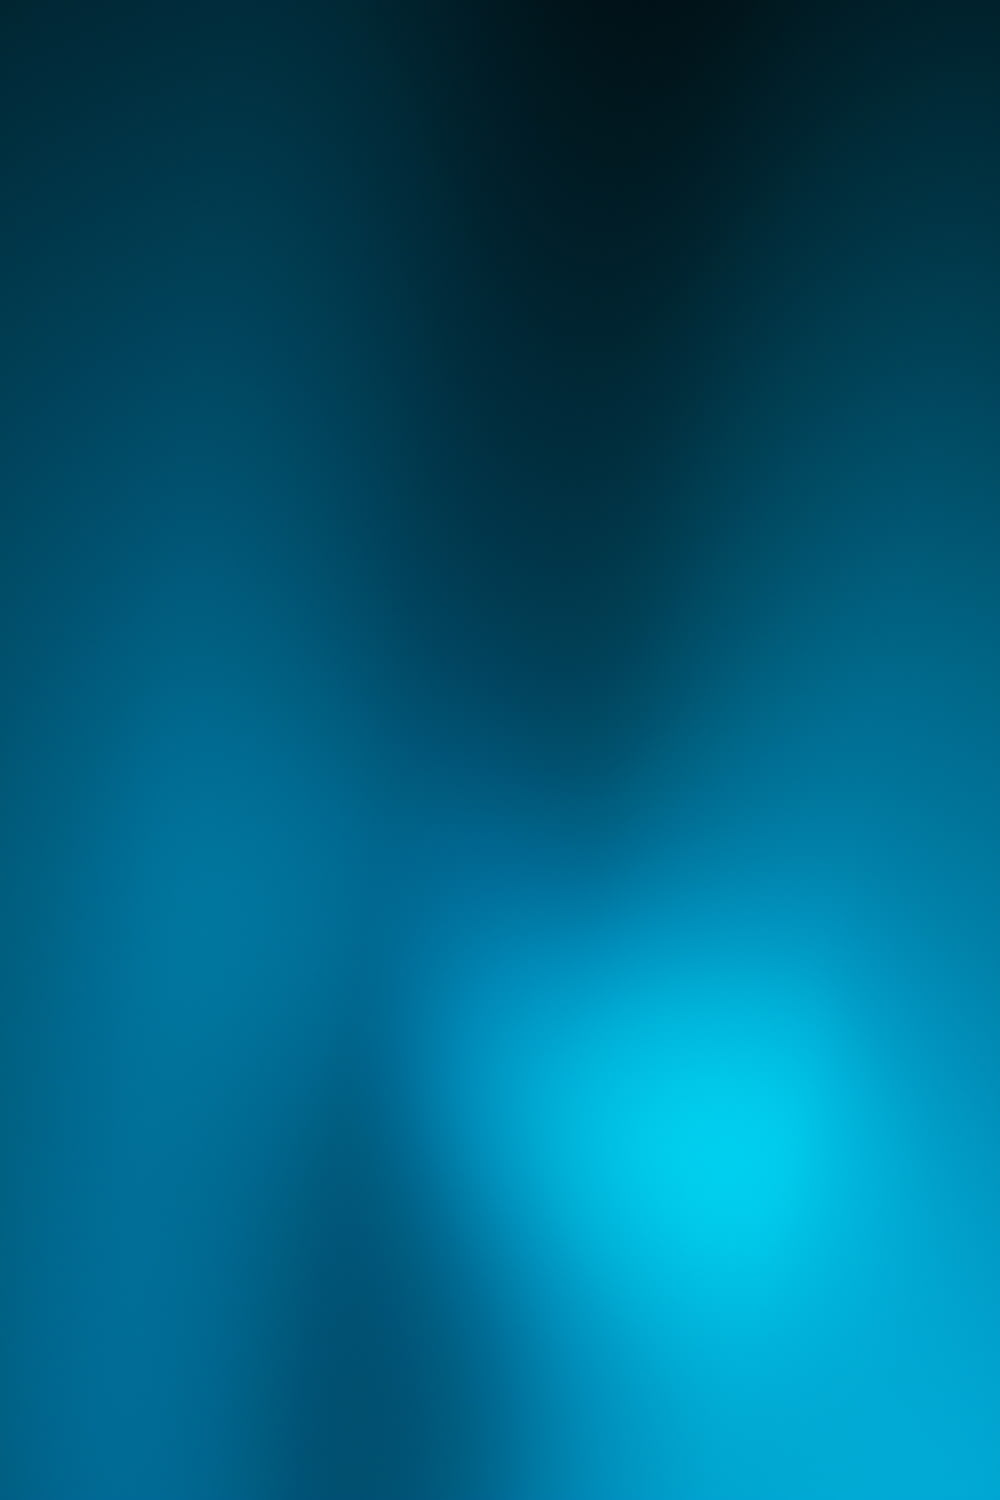 Una imagen borrosa de un fondo azul